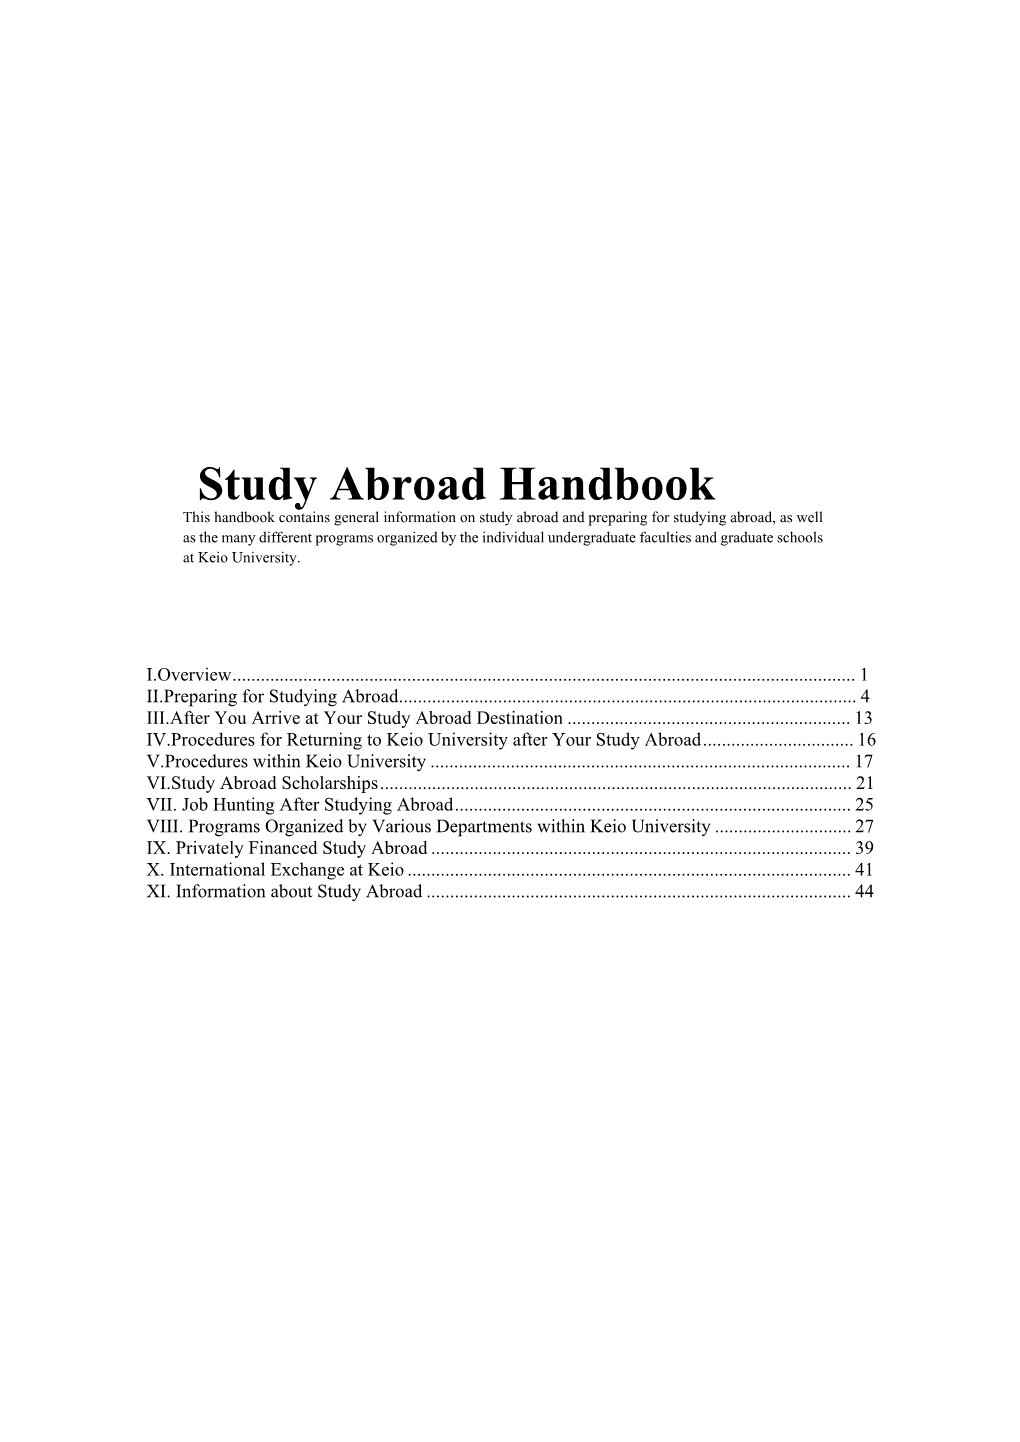 Study Abroad Handbook